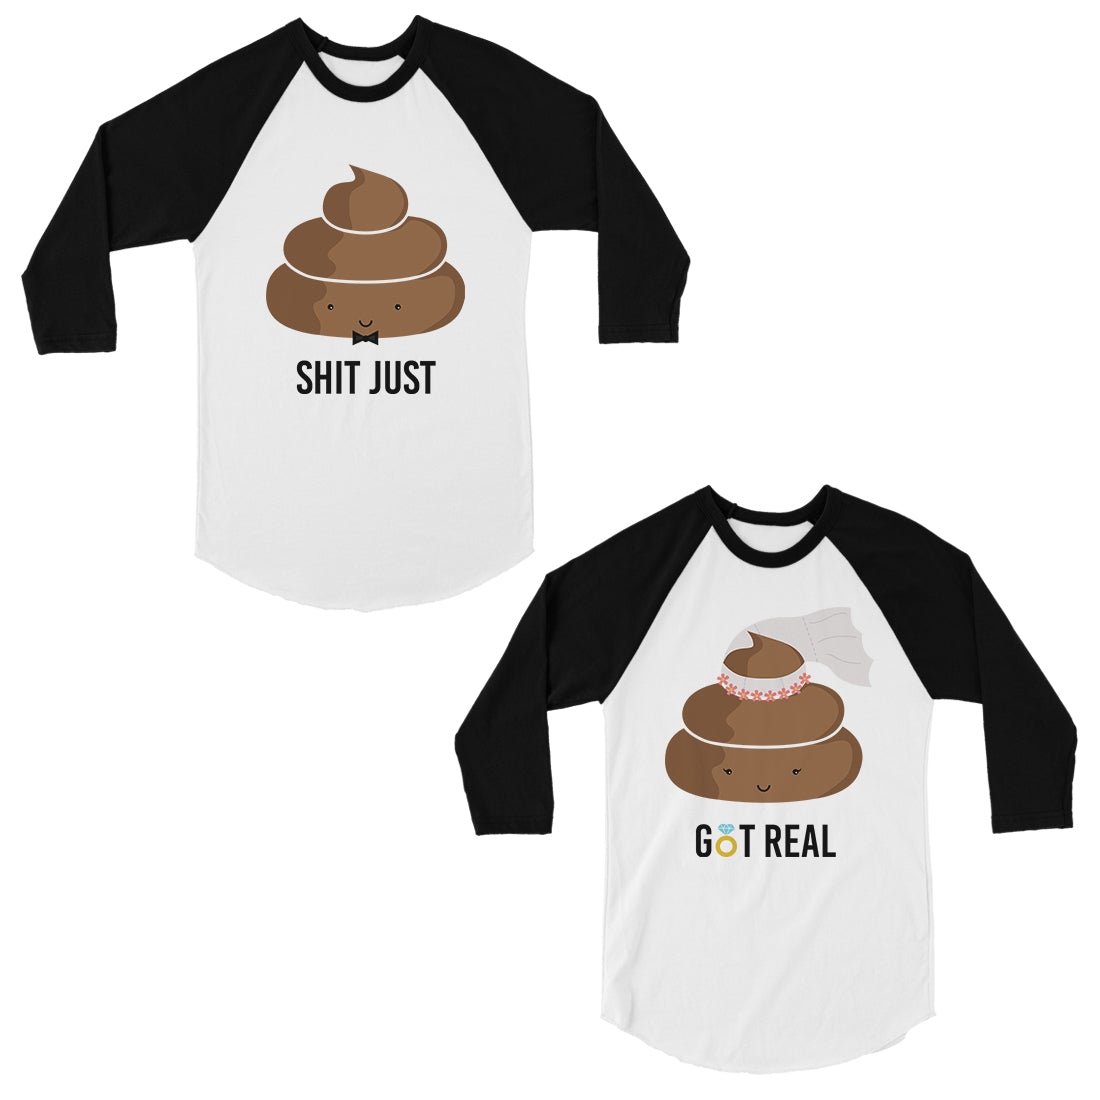 Poop Shit Got Real Matching Baseball Shirts Funny Wedding Gifts Black and White